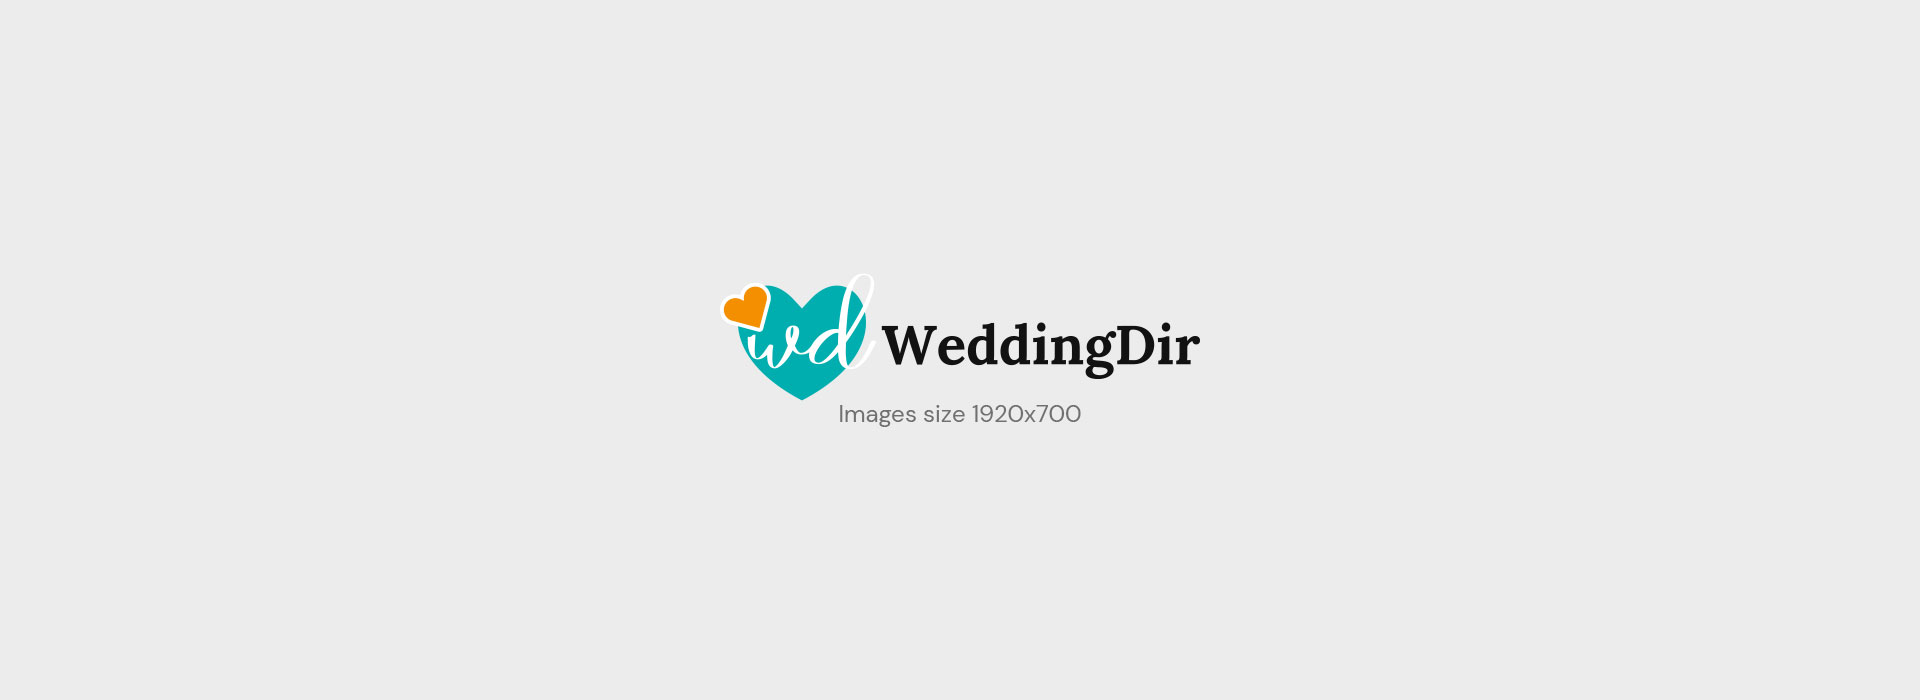 Photographer Category Vendor Gallery 3 Wedding Photography weddingdir slider 4